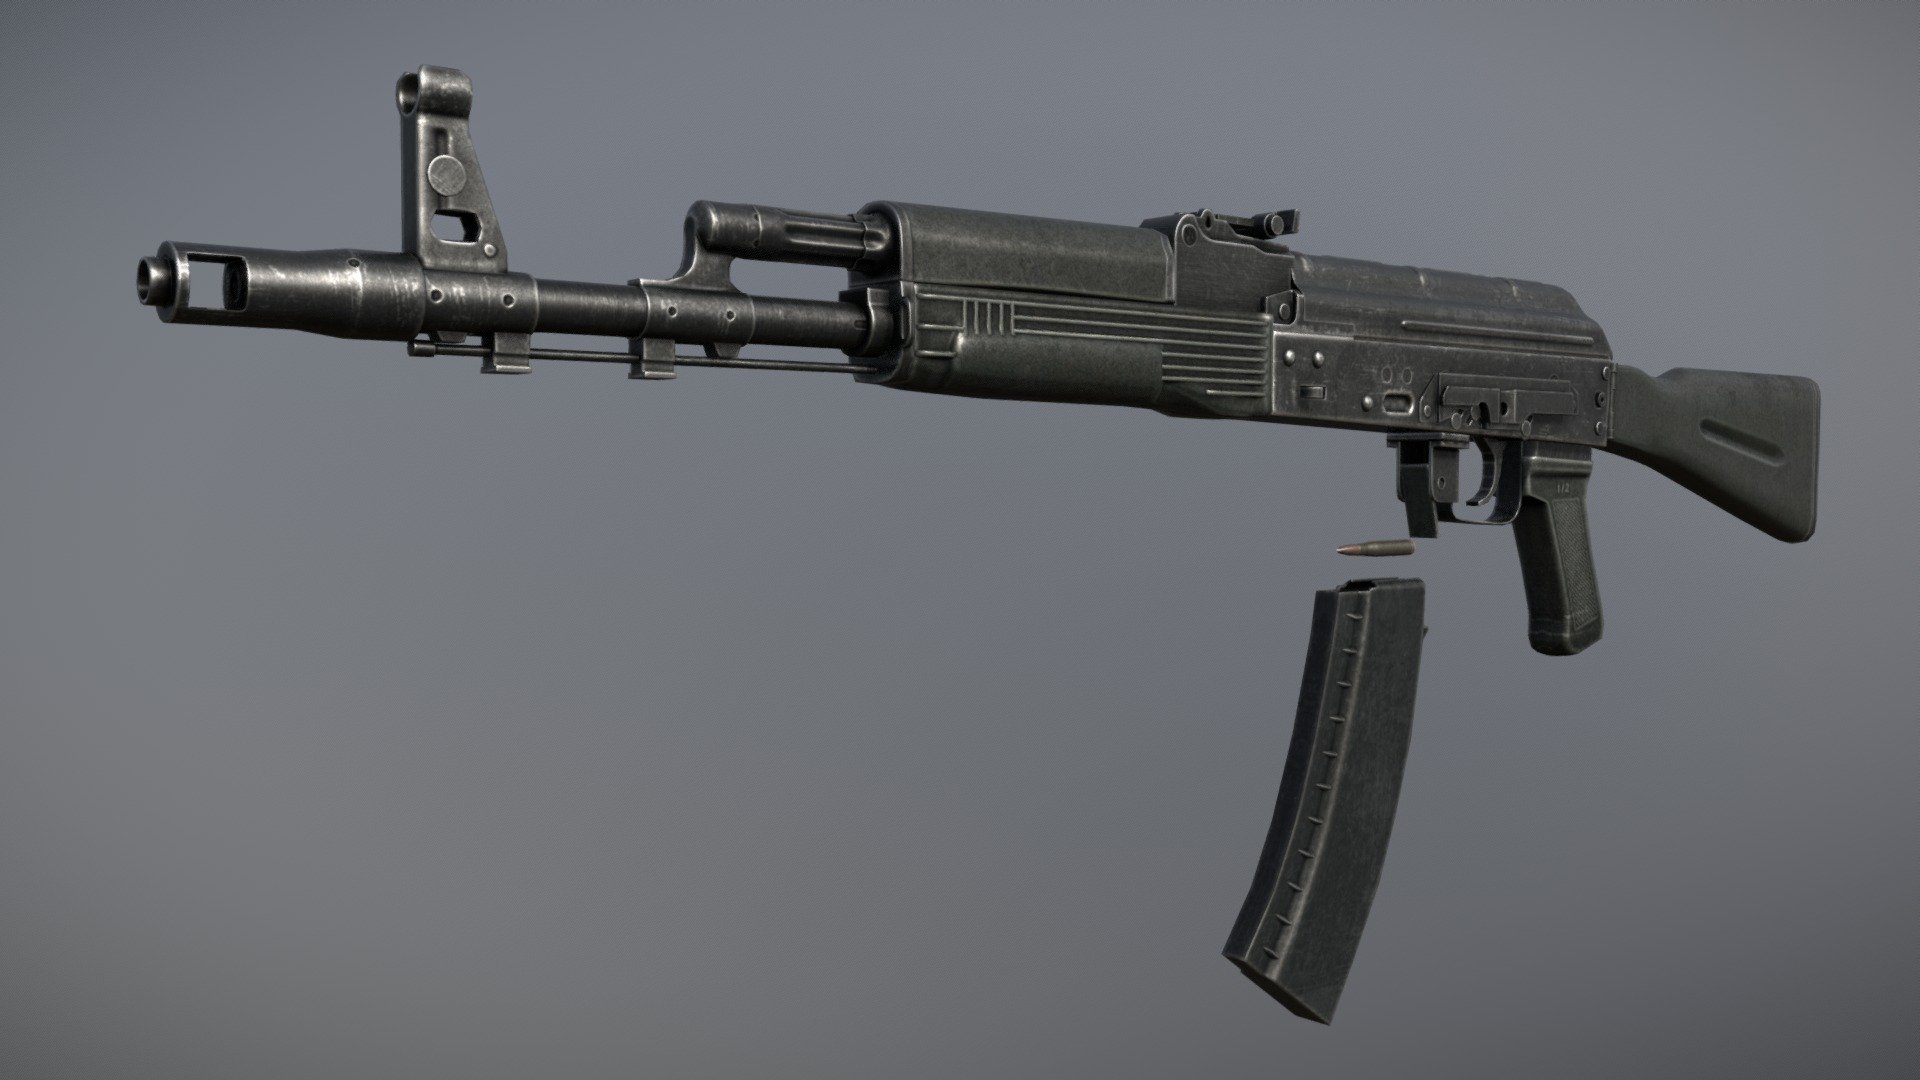 lowpoly gameready model of russian kalashnikov assault rifle model 1974 - AK 74M - 3D model by owlmadmax 3d model